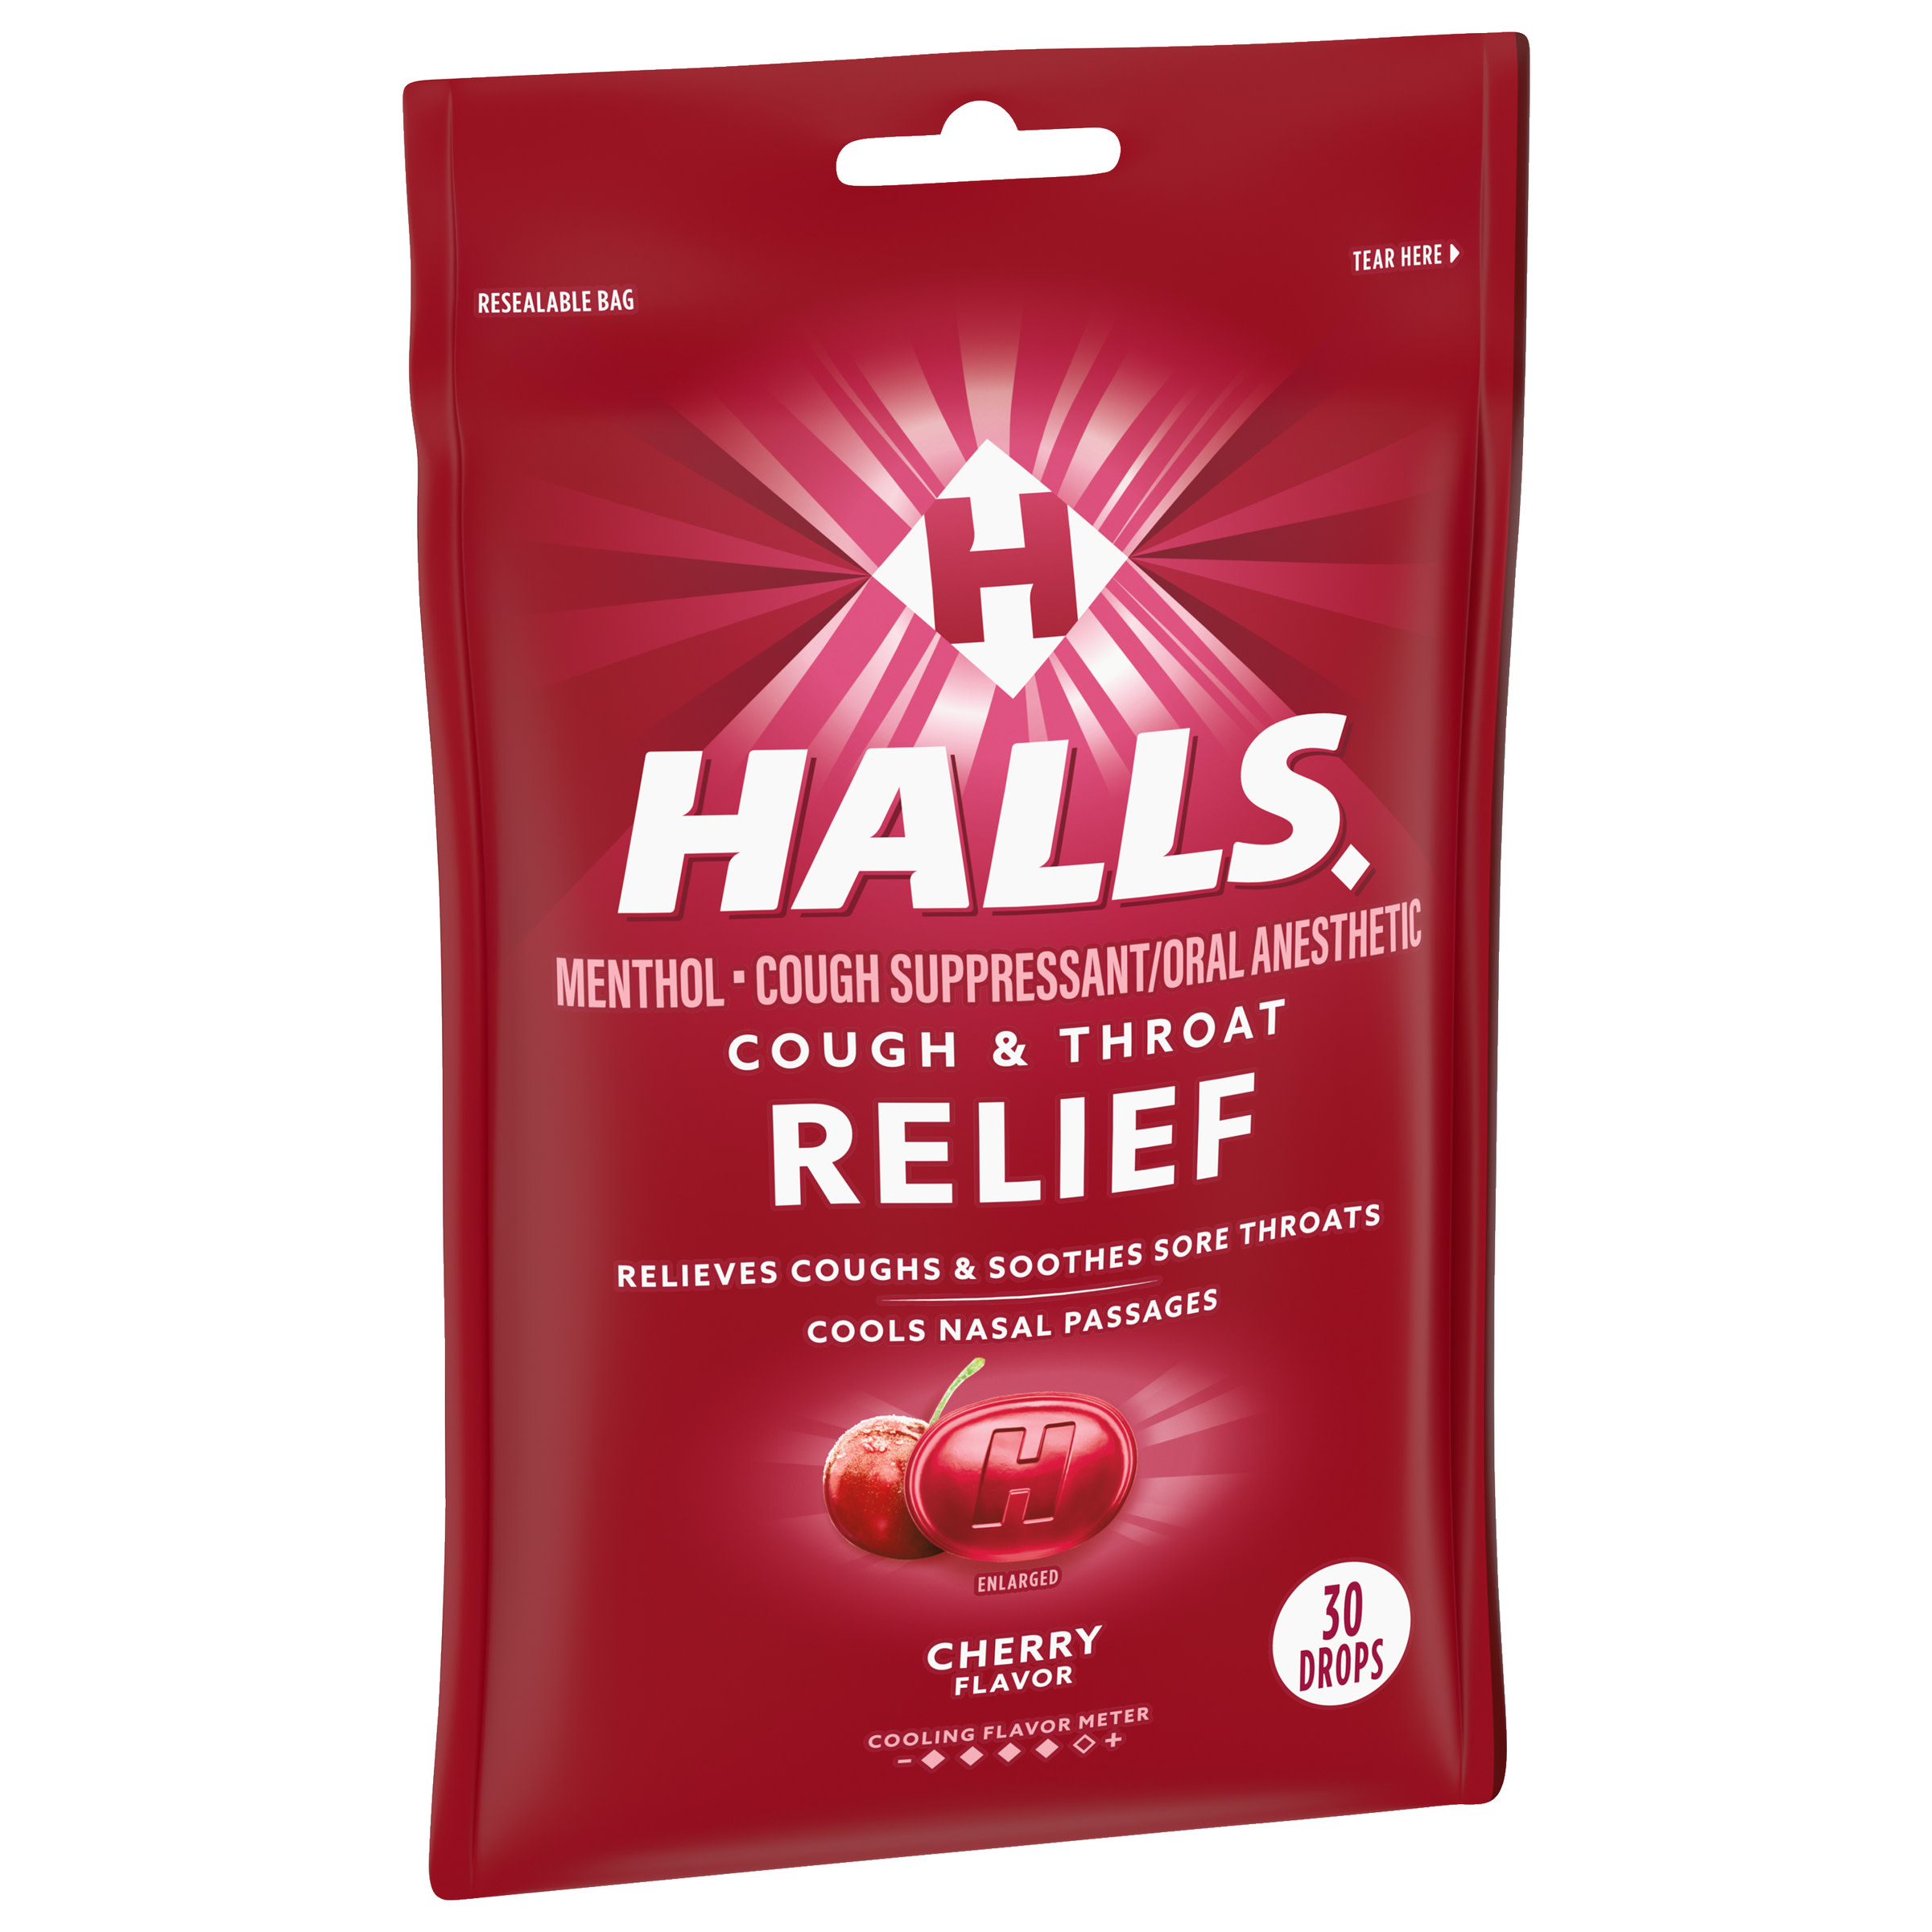 HALLS Relief Cherry Cough Drops, 30 Drops - image 2 of 12